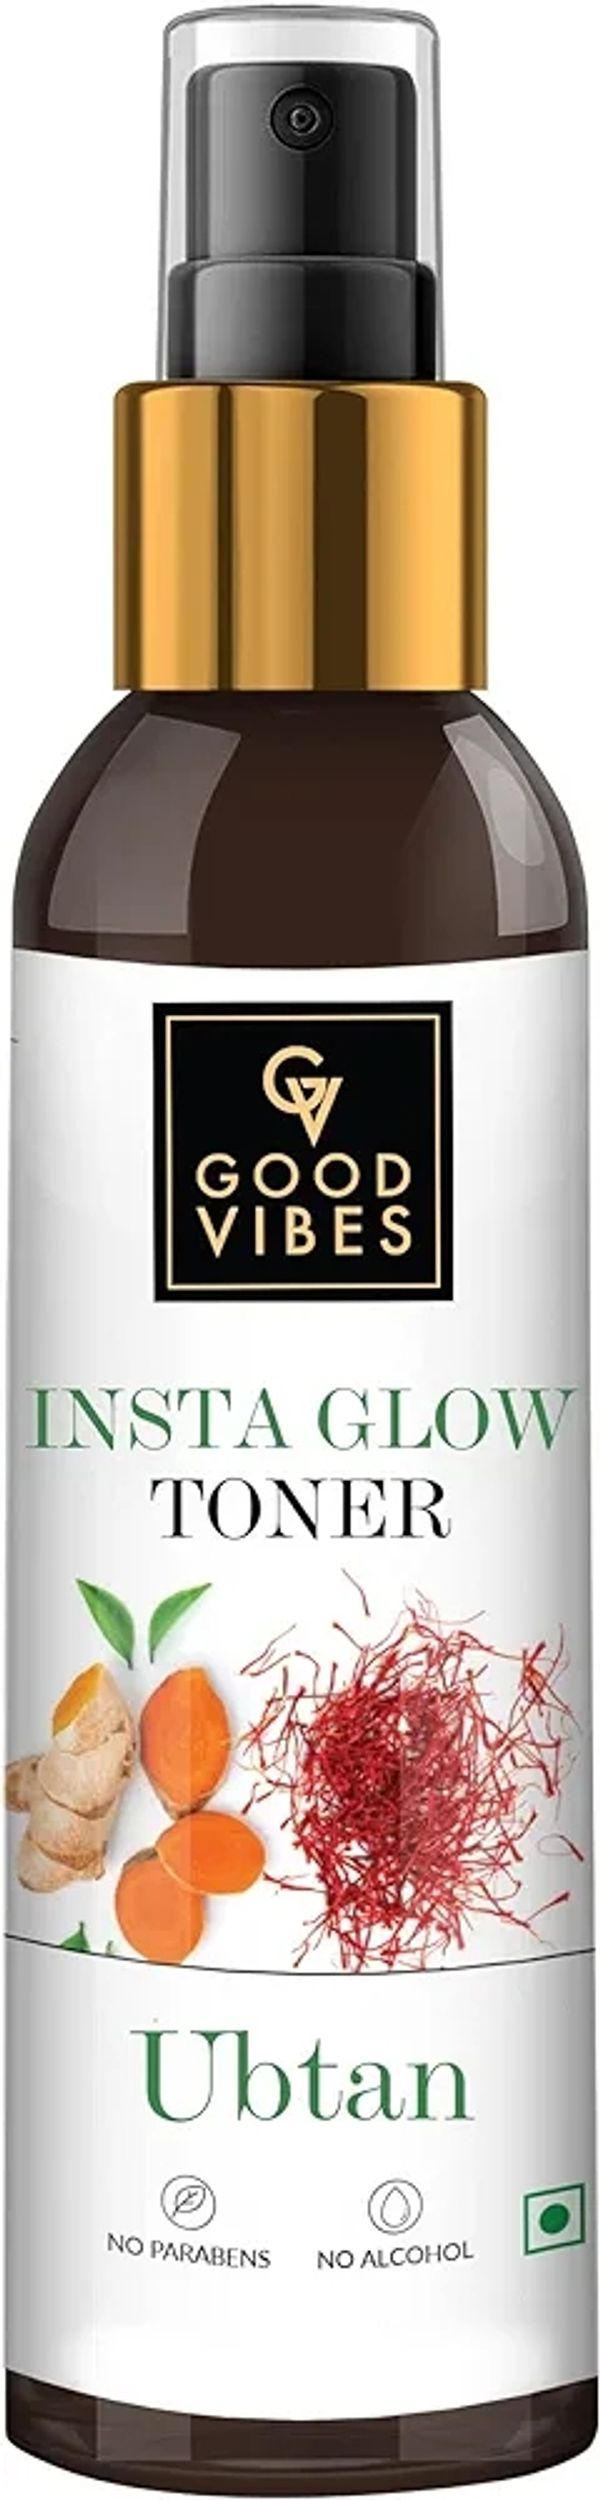 Good vibes Good Vibes Ubtan Insta Glow Toner, 120 ml |